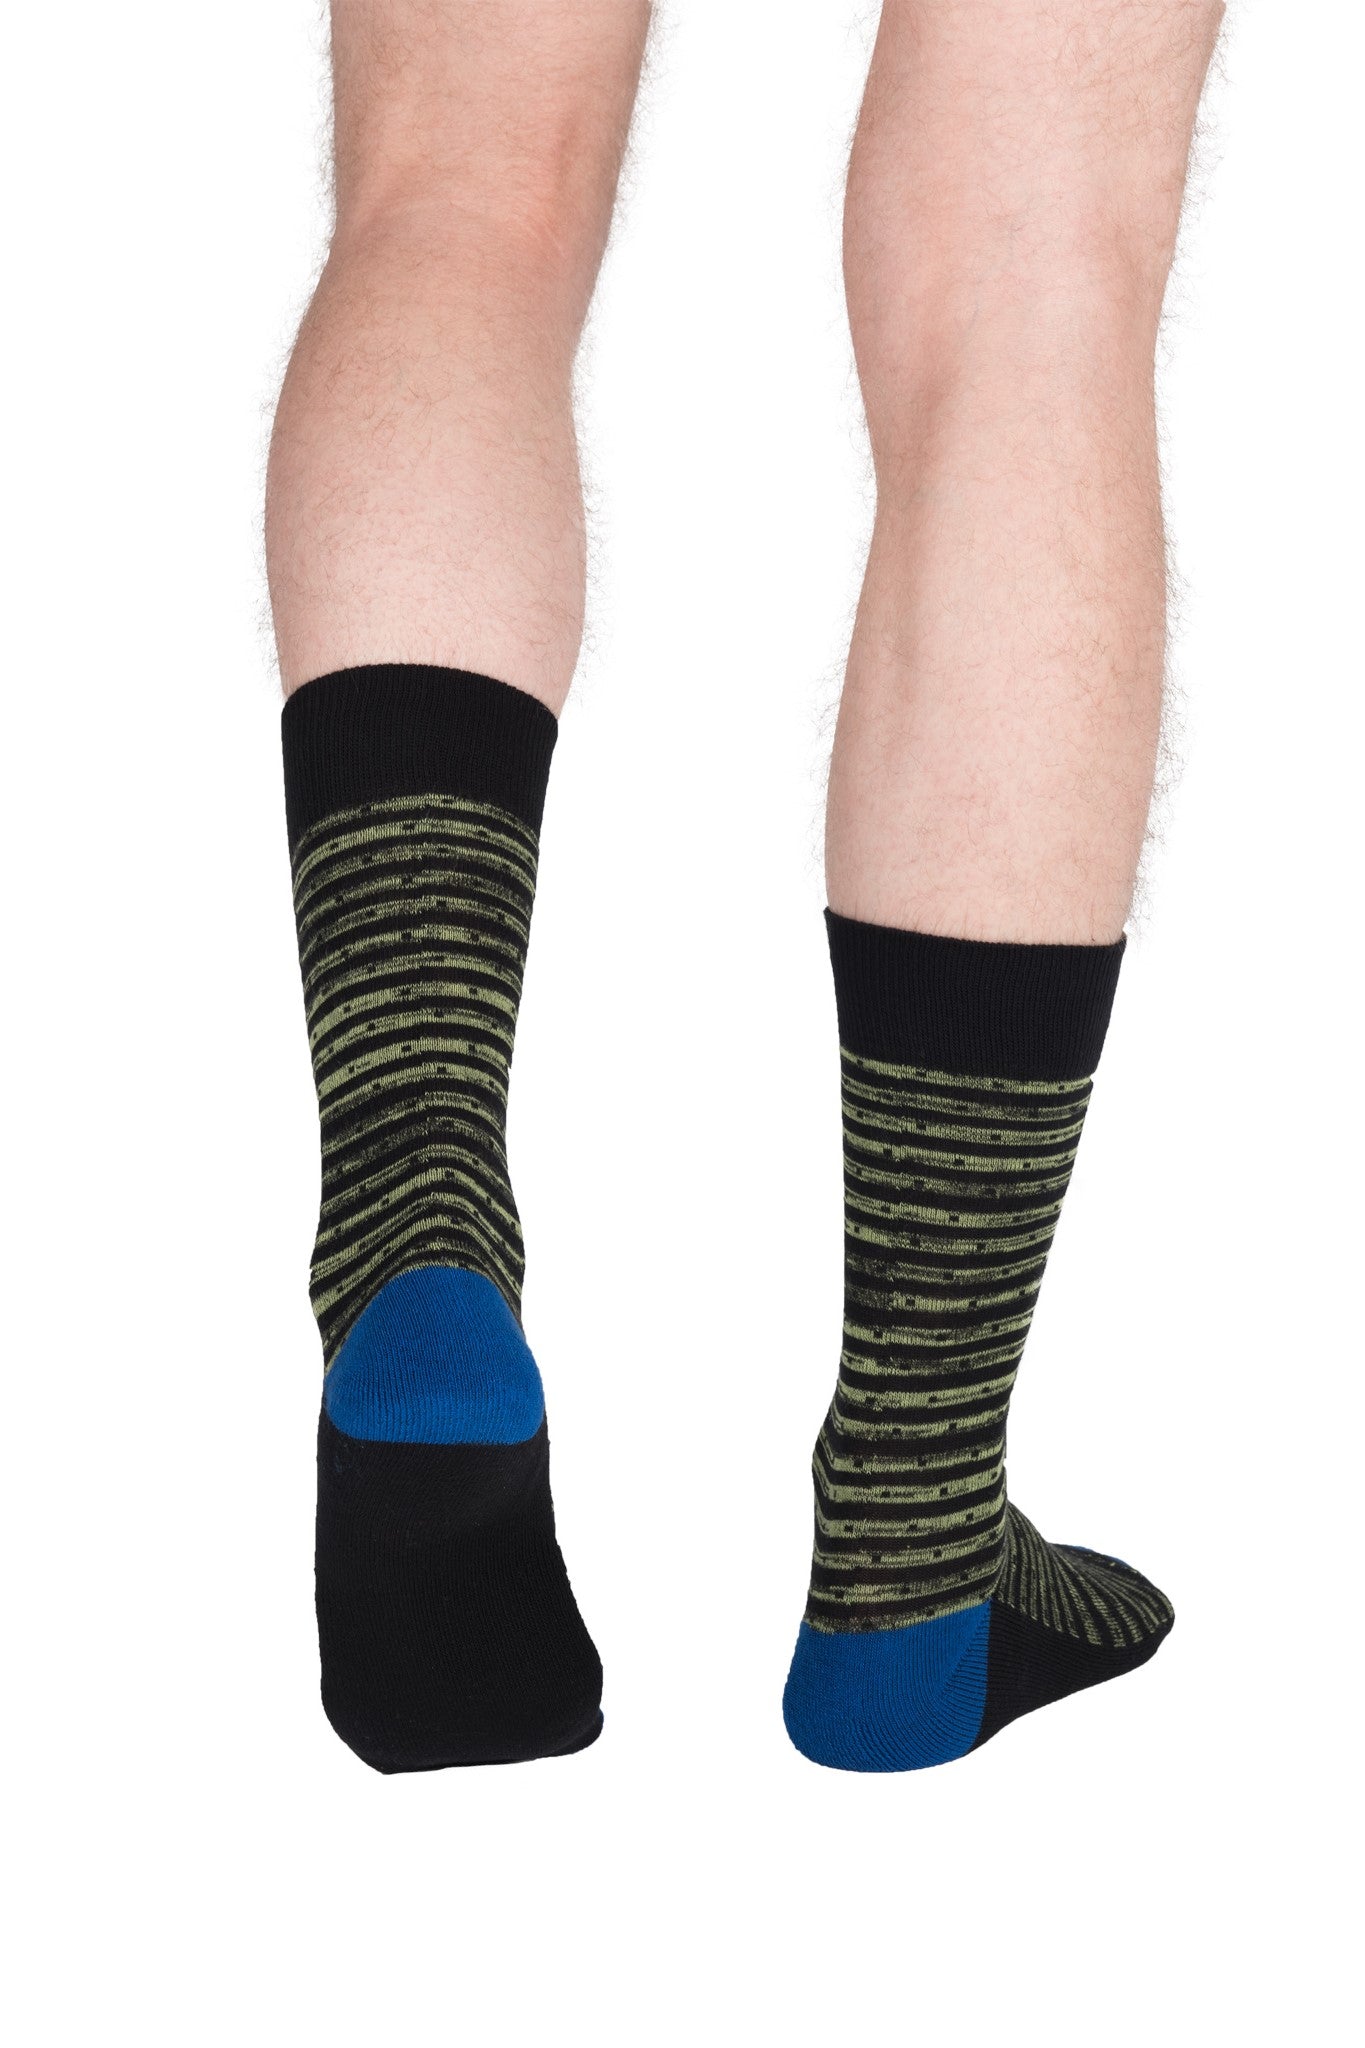 Kayapo Men's Crew Socks